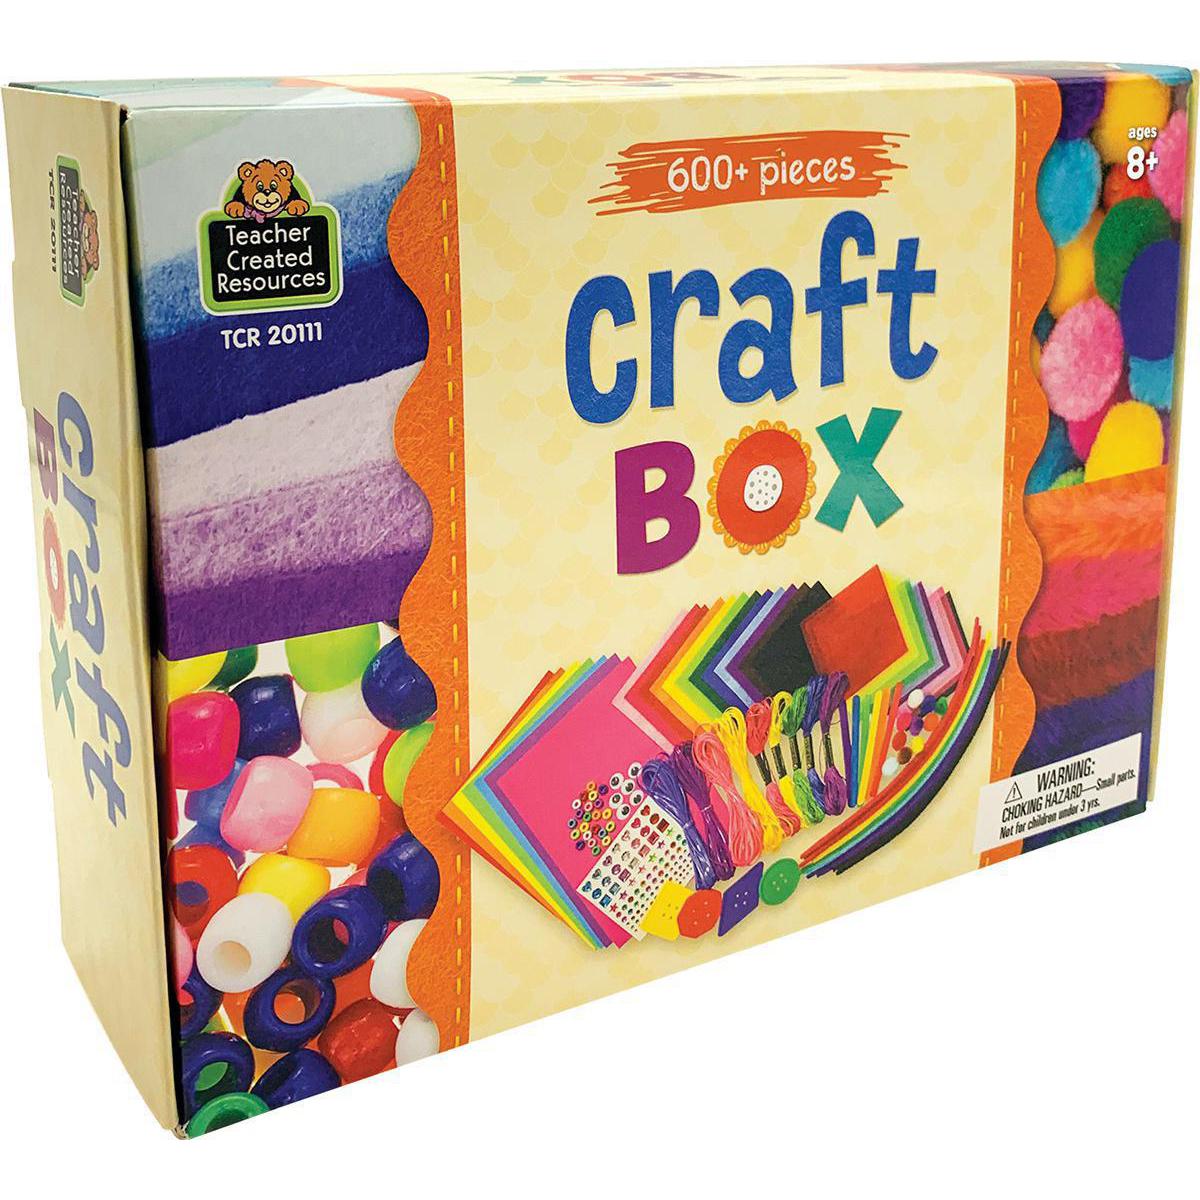  Craft Box 